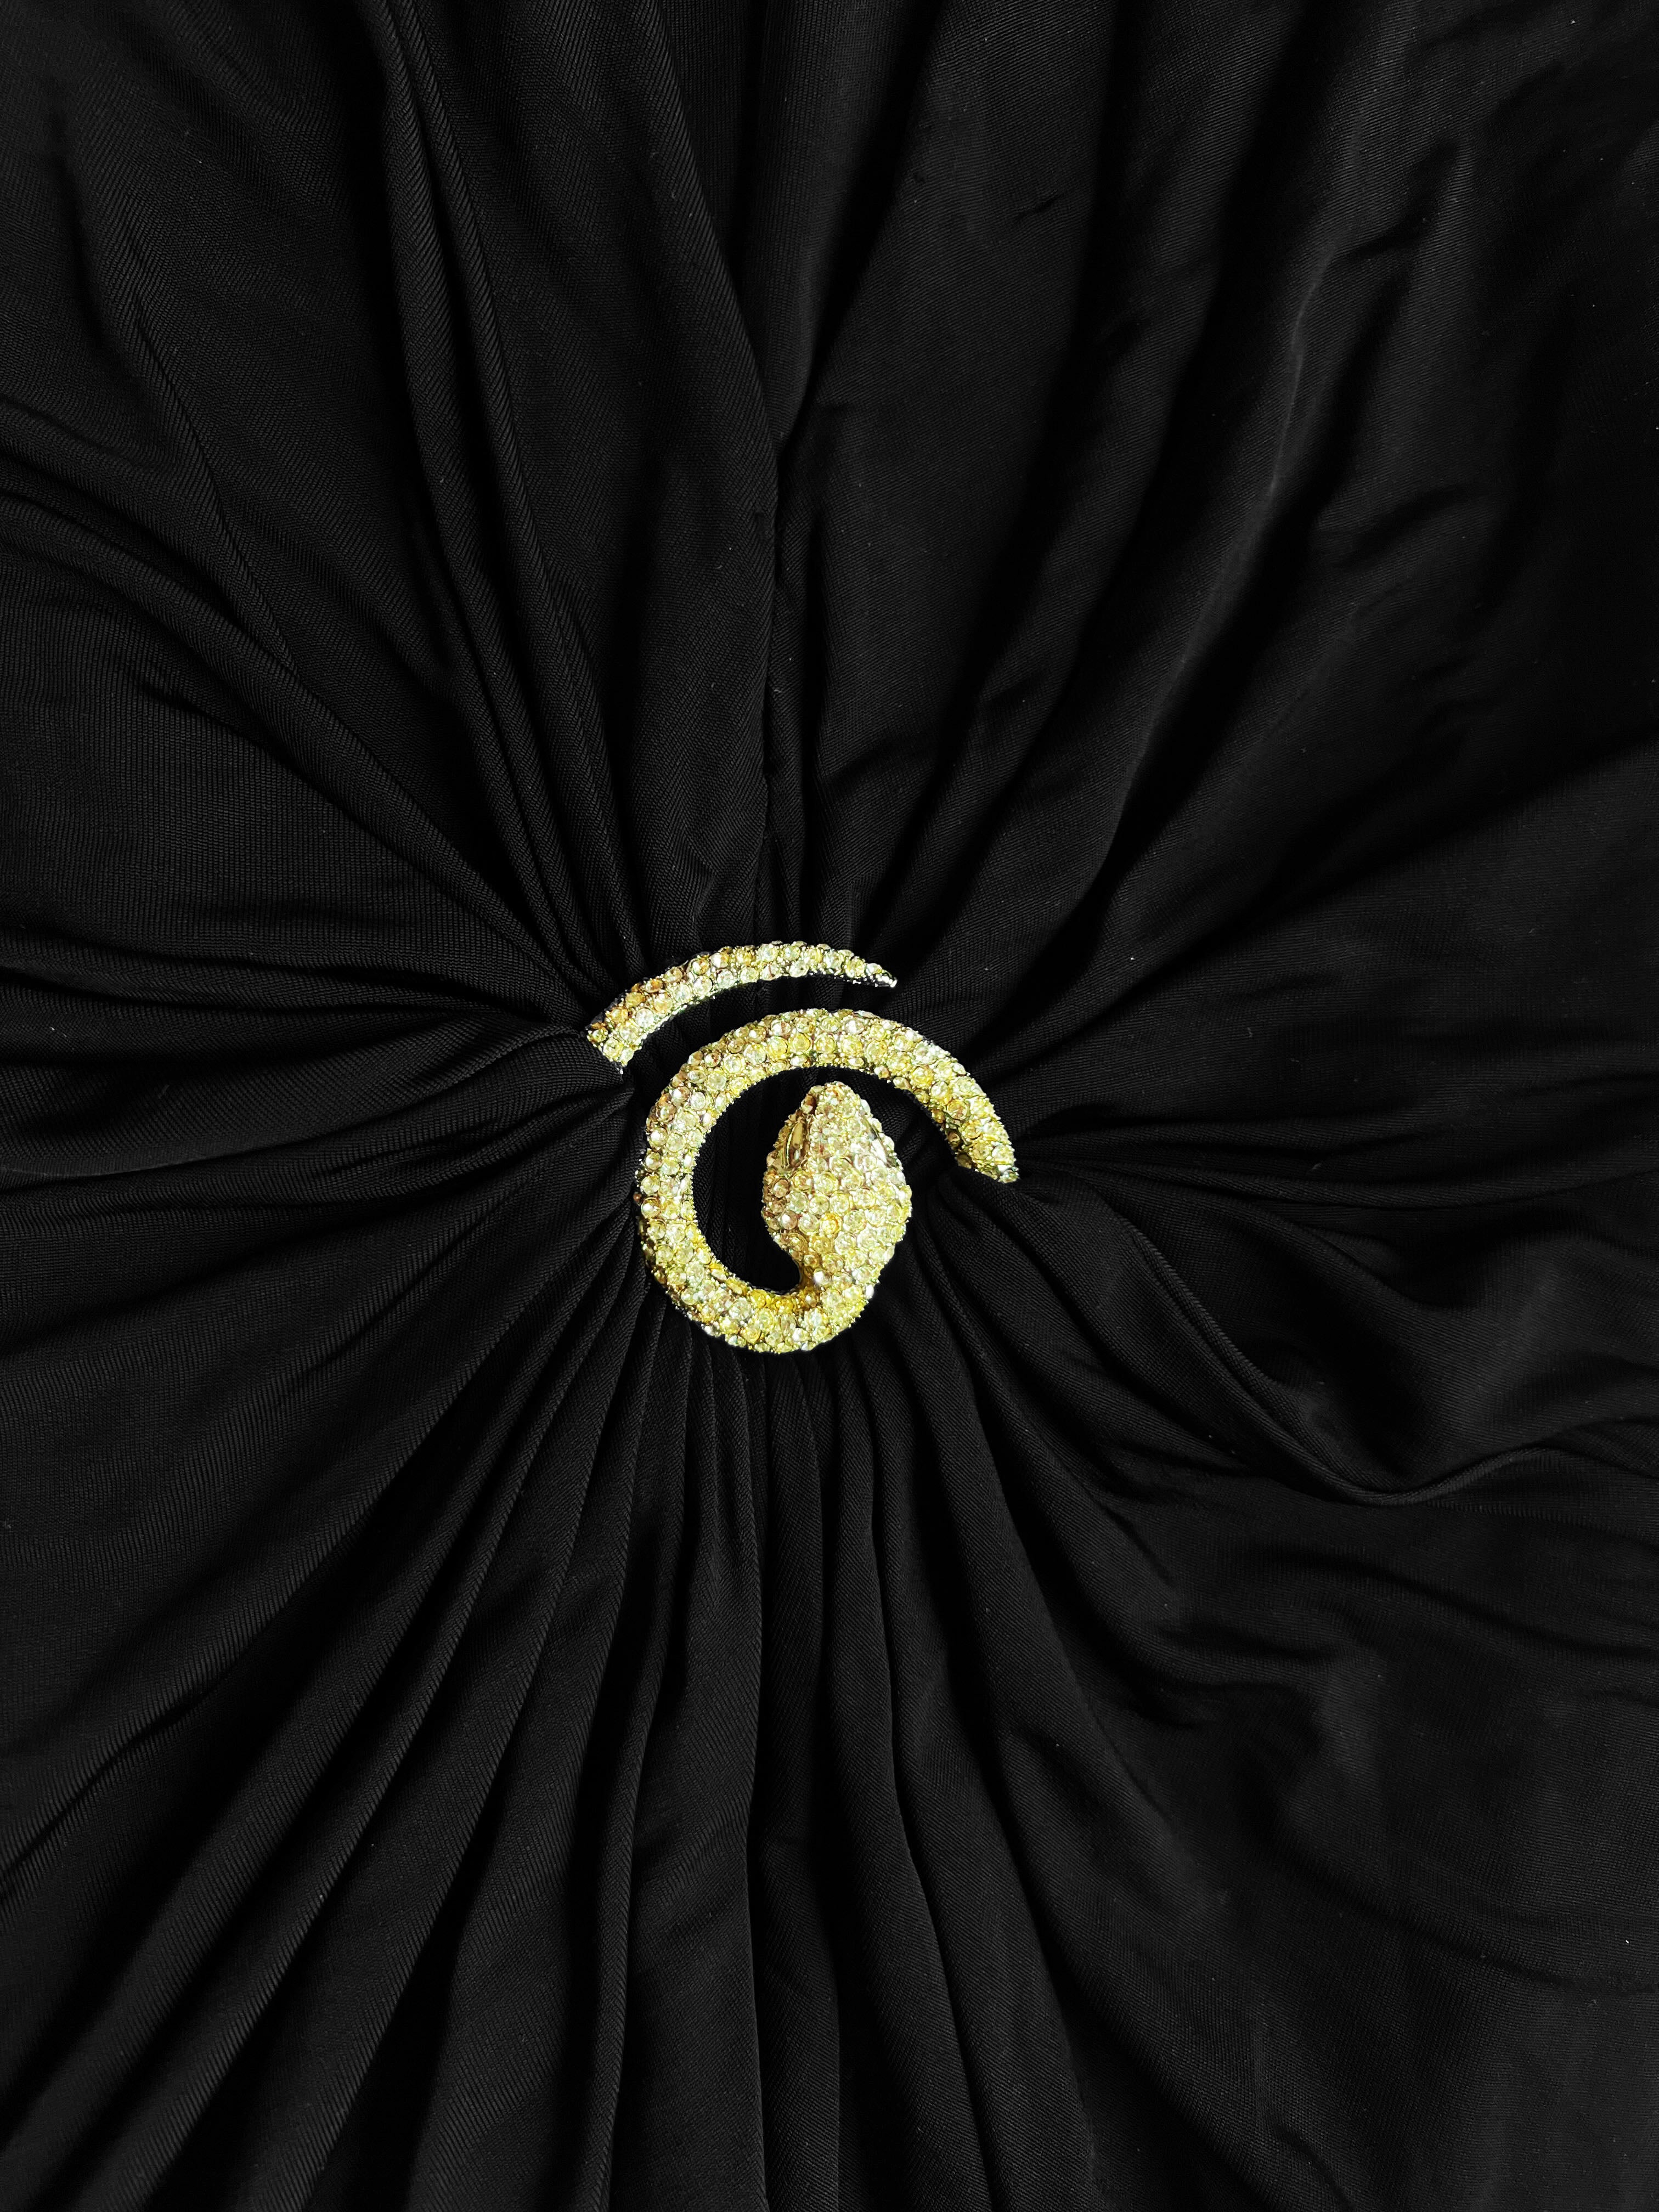 Roberto Cavalli 1990s Black Snake-Embellished Top